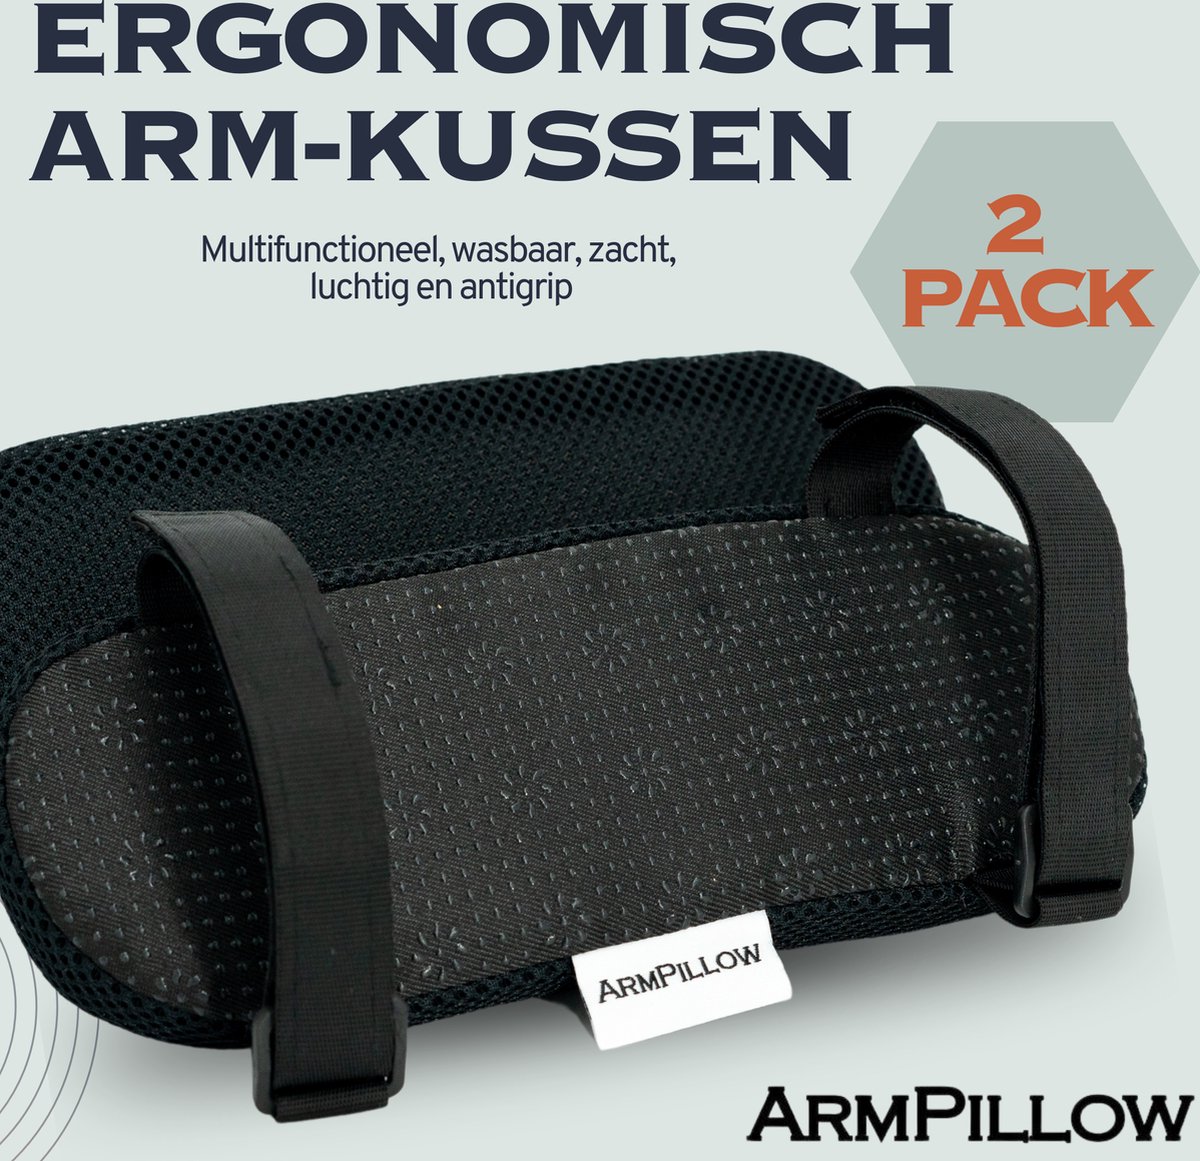 ArmPillow - Ergonomische Arm kussens - Bureaustoel arm kussen - Arm ondersteuning - 2 Stuks - Bureaustoel accessoires - Stoel armleuningen